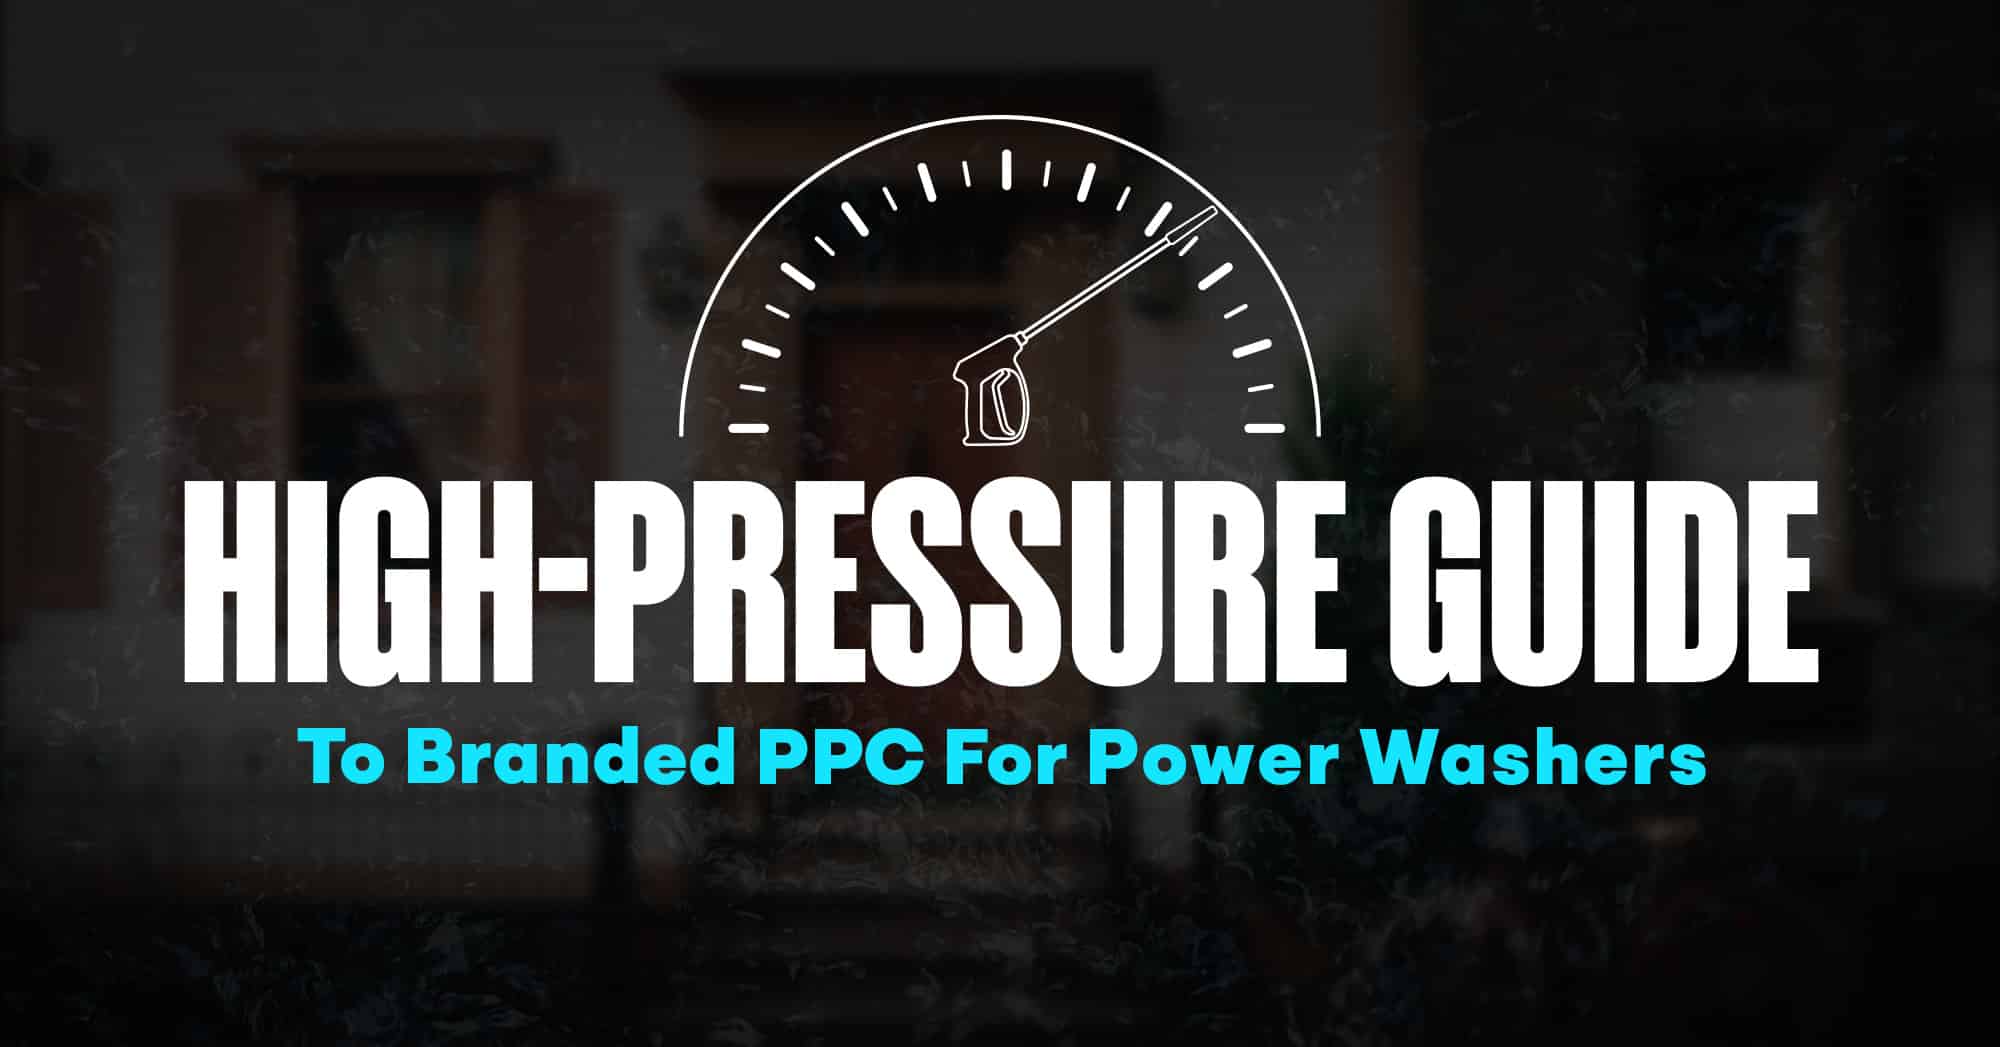 high-pressure guide - ppc marketing blog image